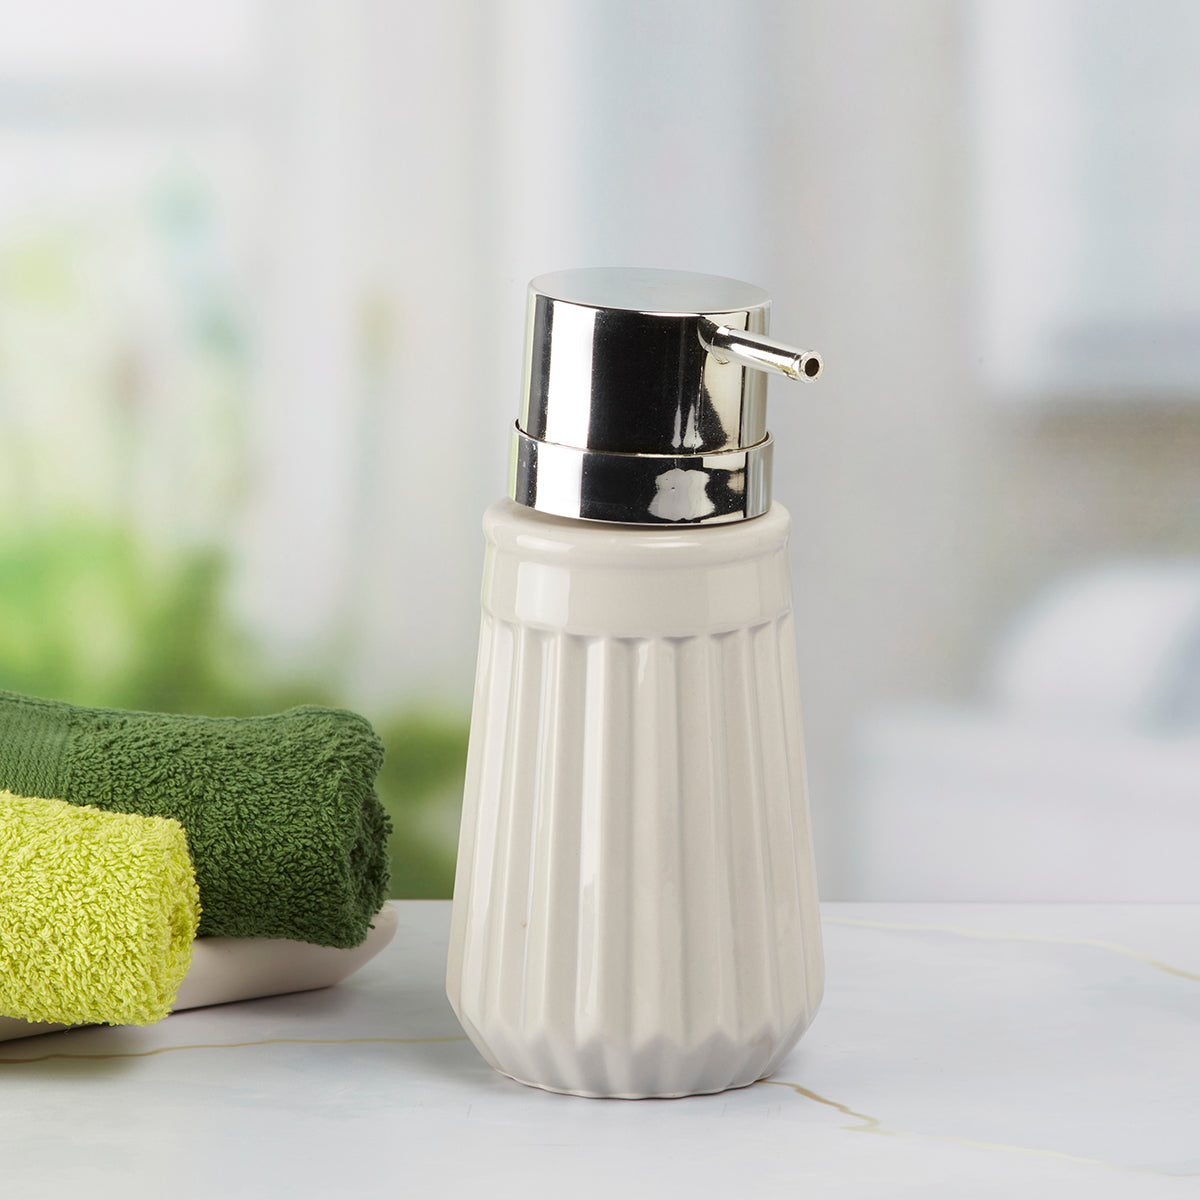 Ceramic Soap Dispenser handwash Pump for Bathroom, Set of 1, Grey (7983)